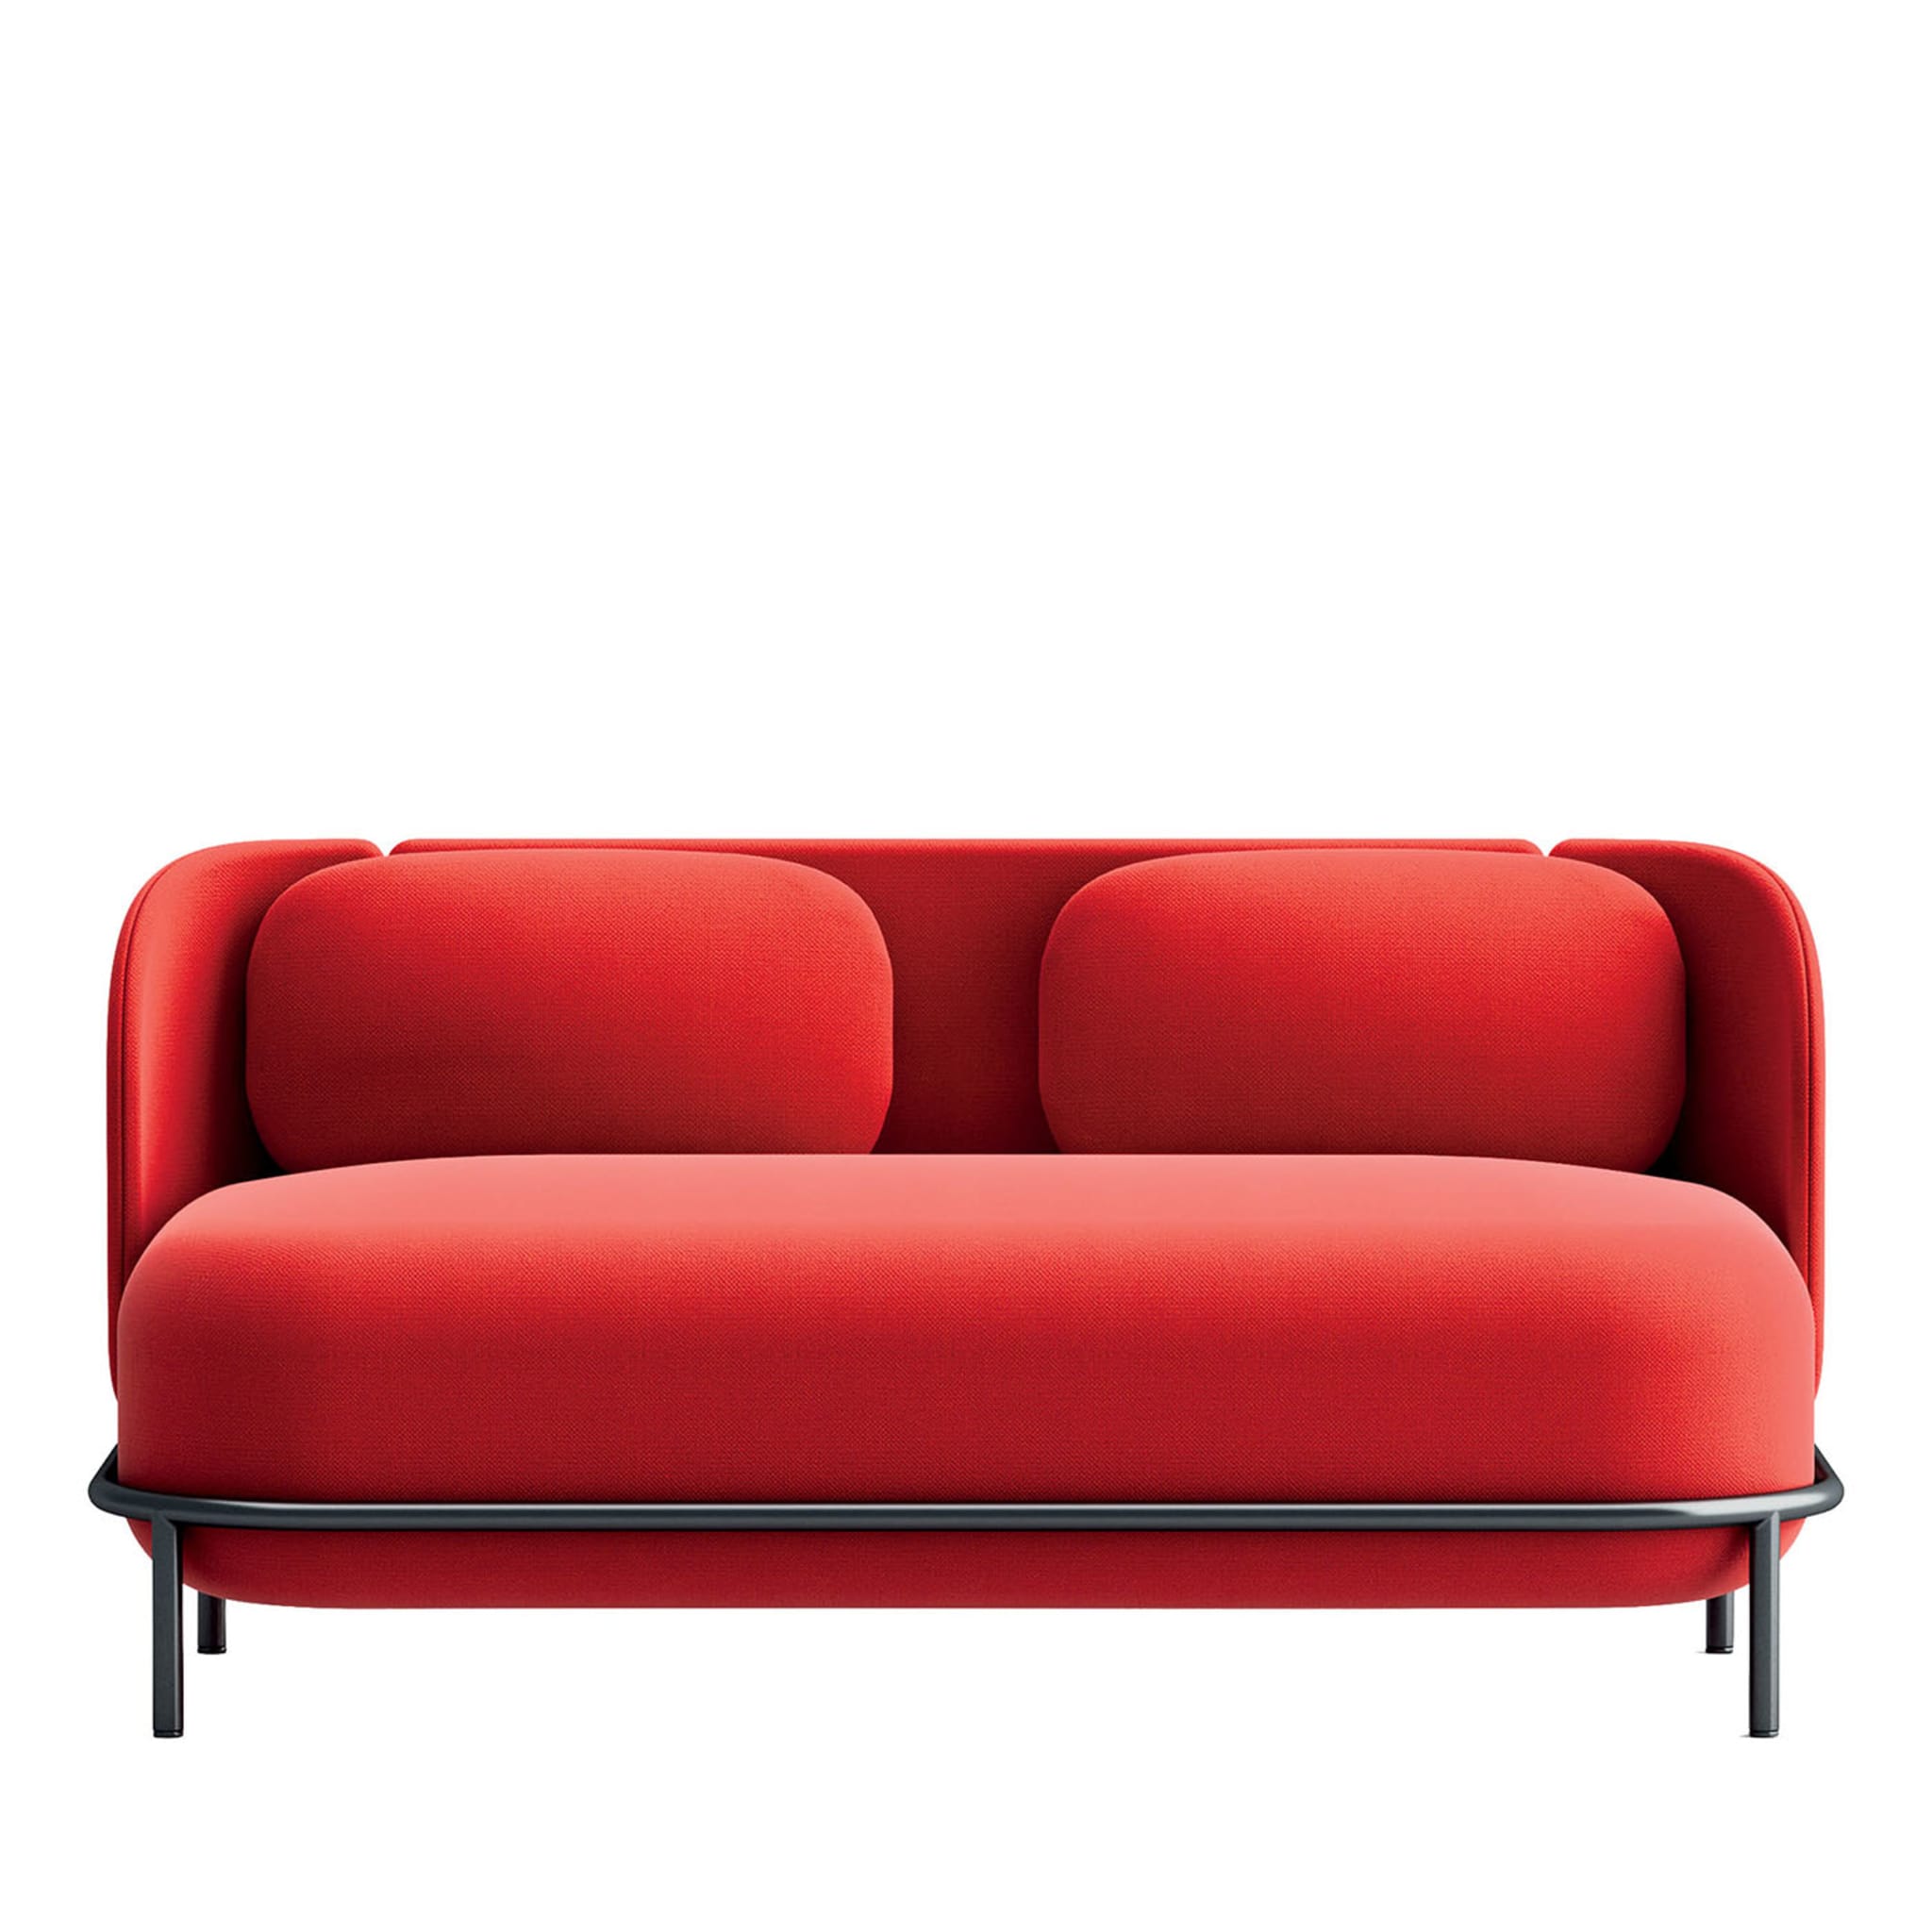 Kühnes rotes Sofa von Studio Pastina - Hauptansicht